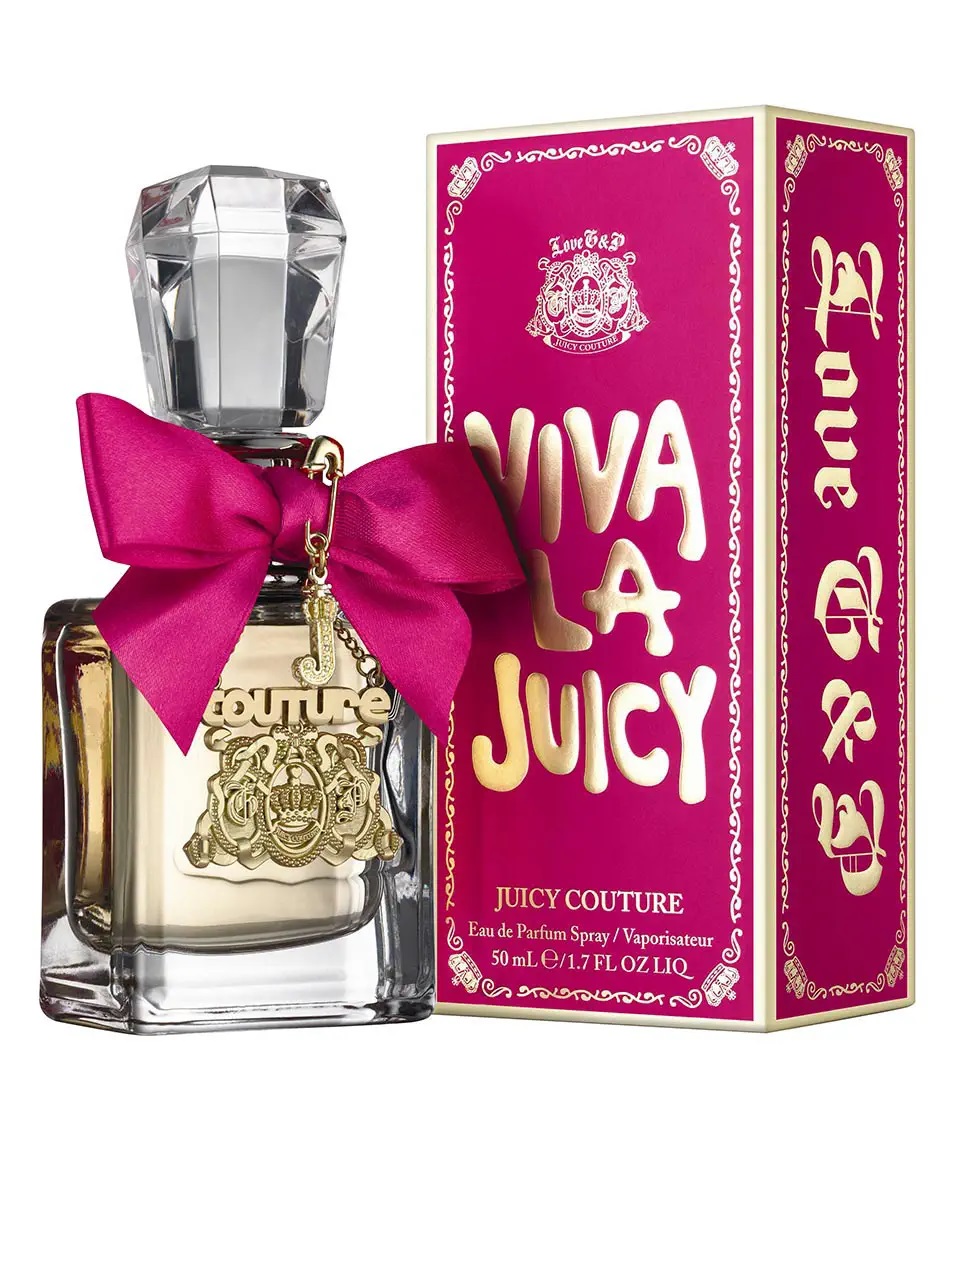 Juicy Couture Viva la Juicy Eau de Parfum 50 ml